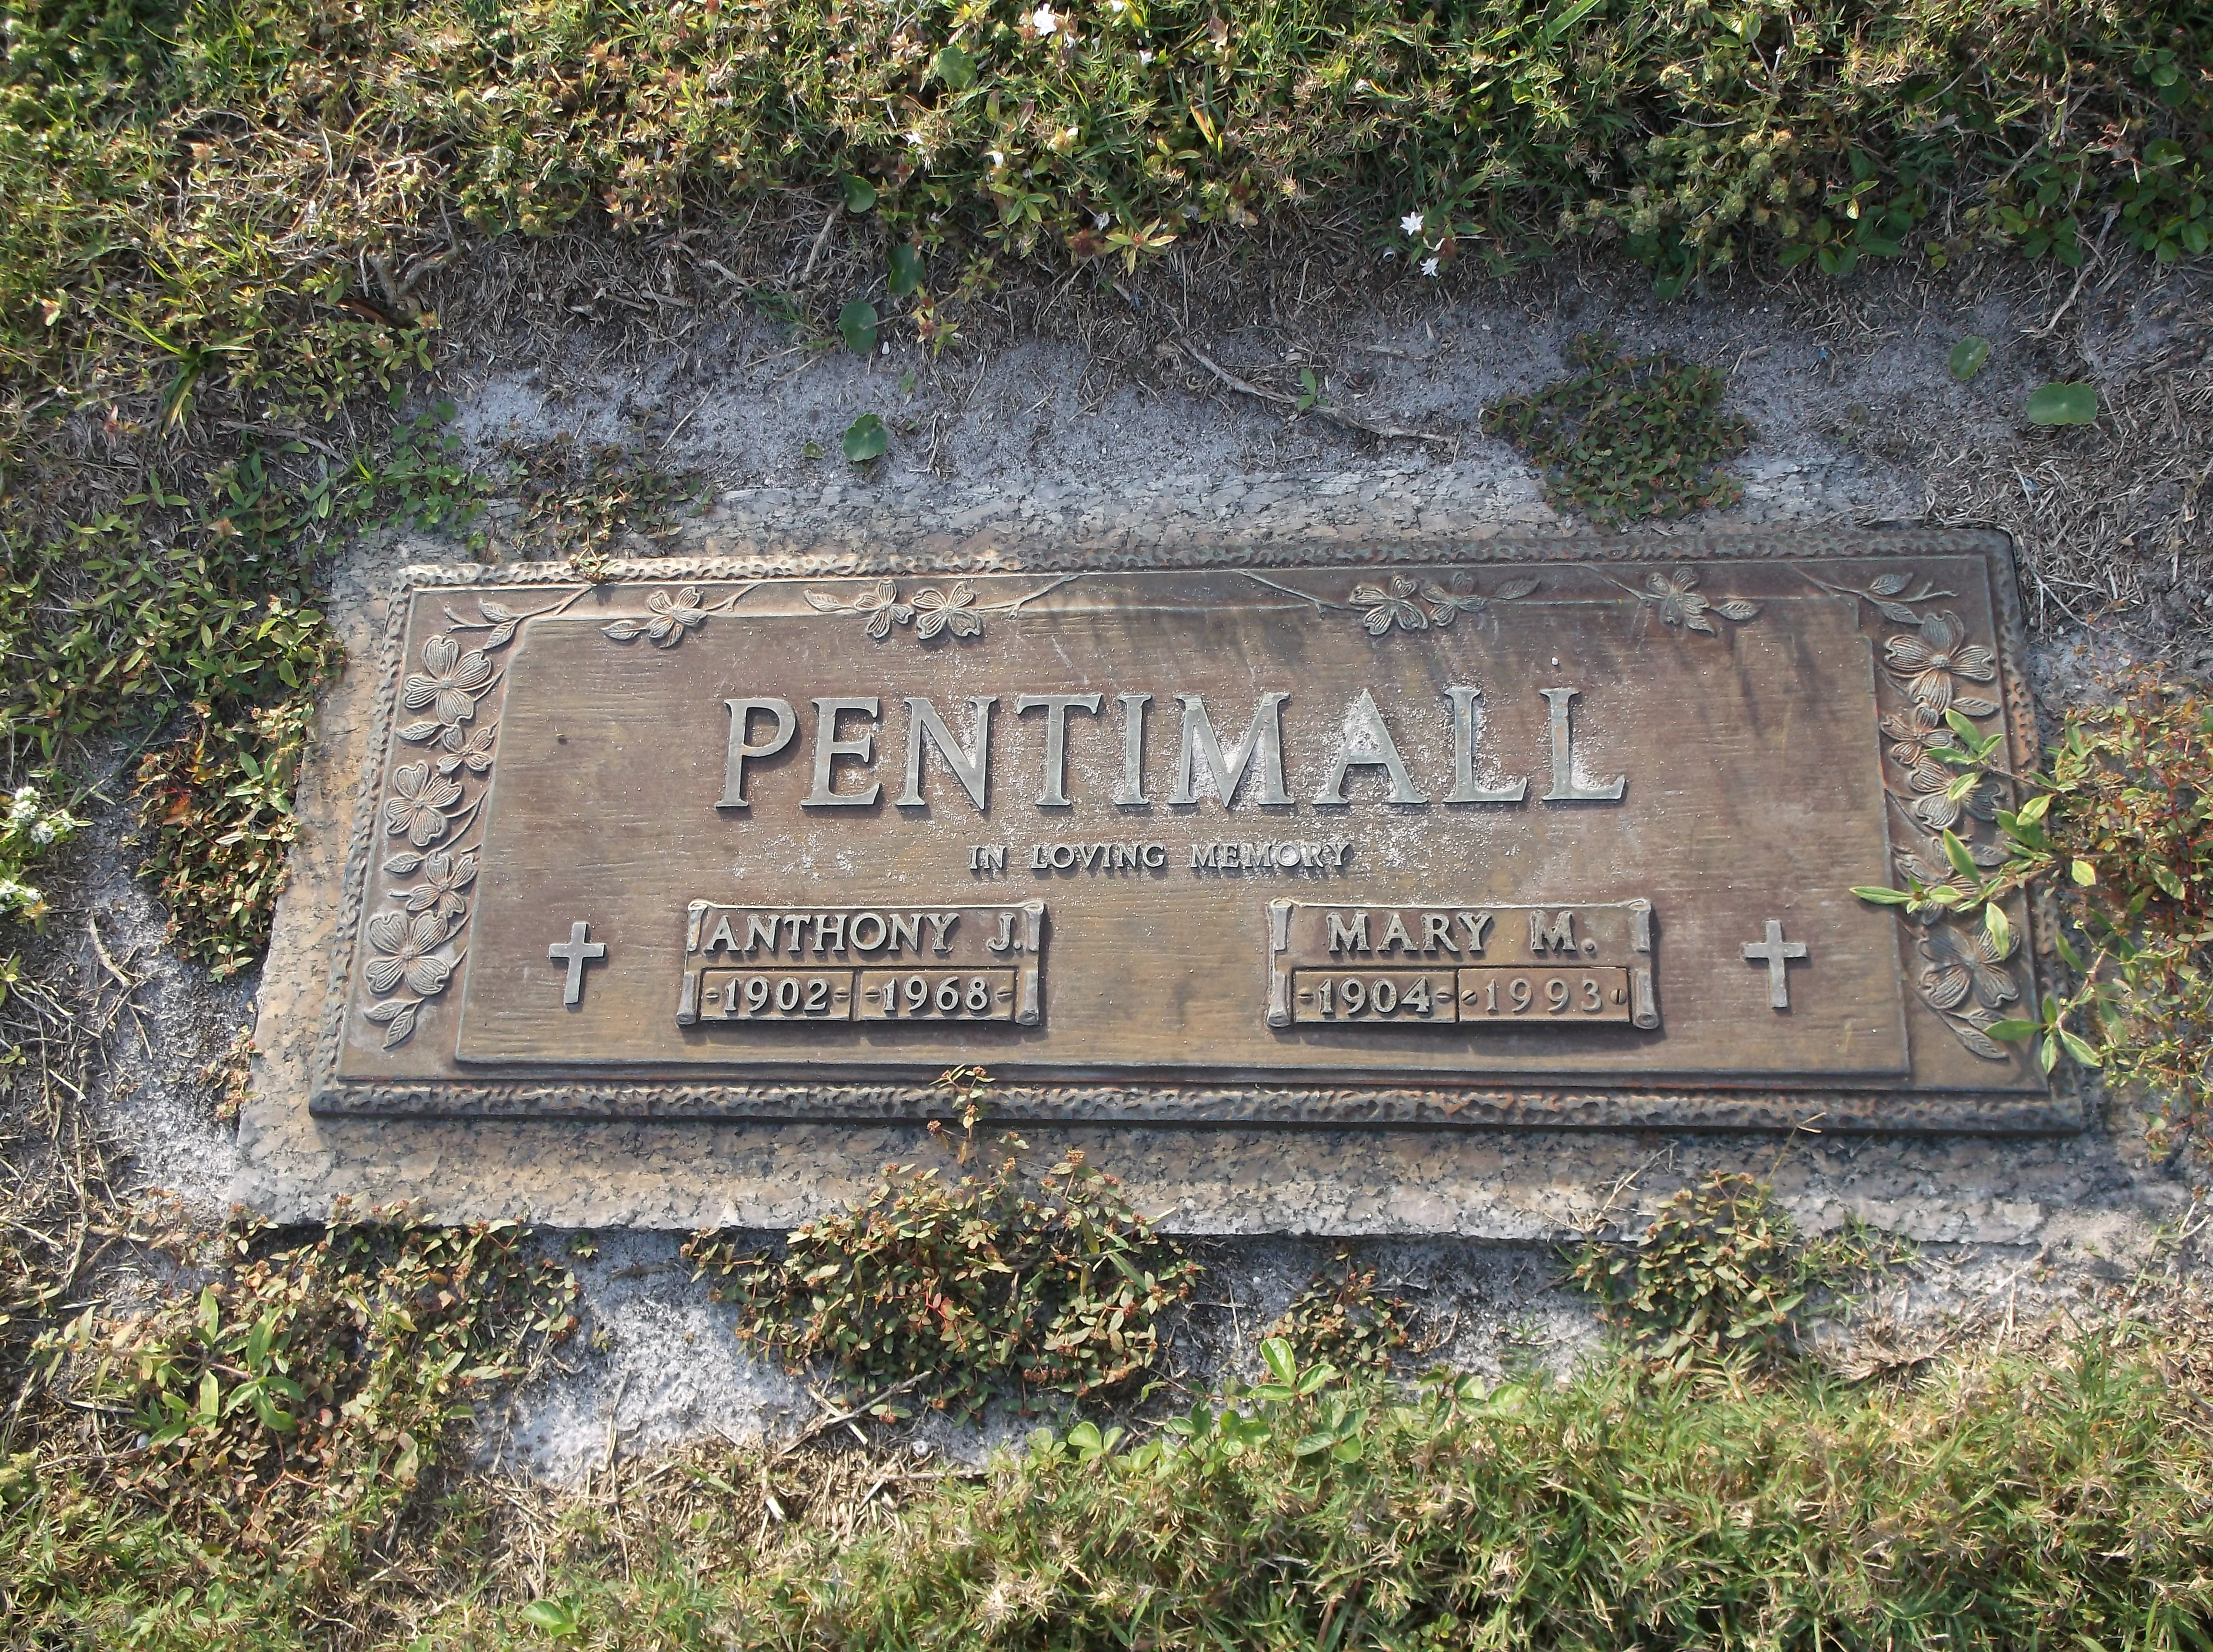 Anthony J Pentimall